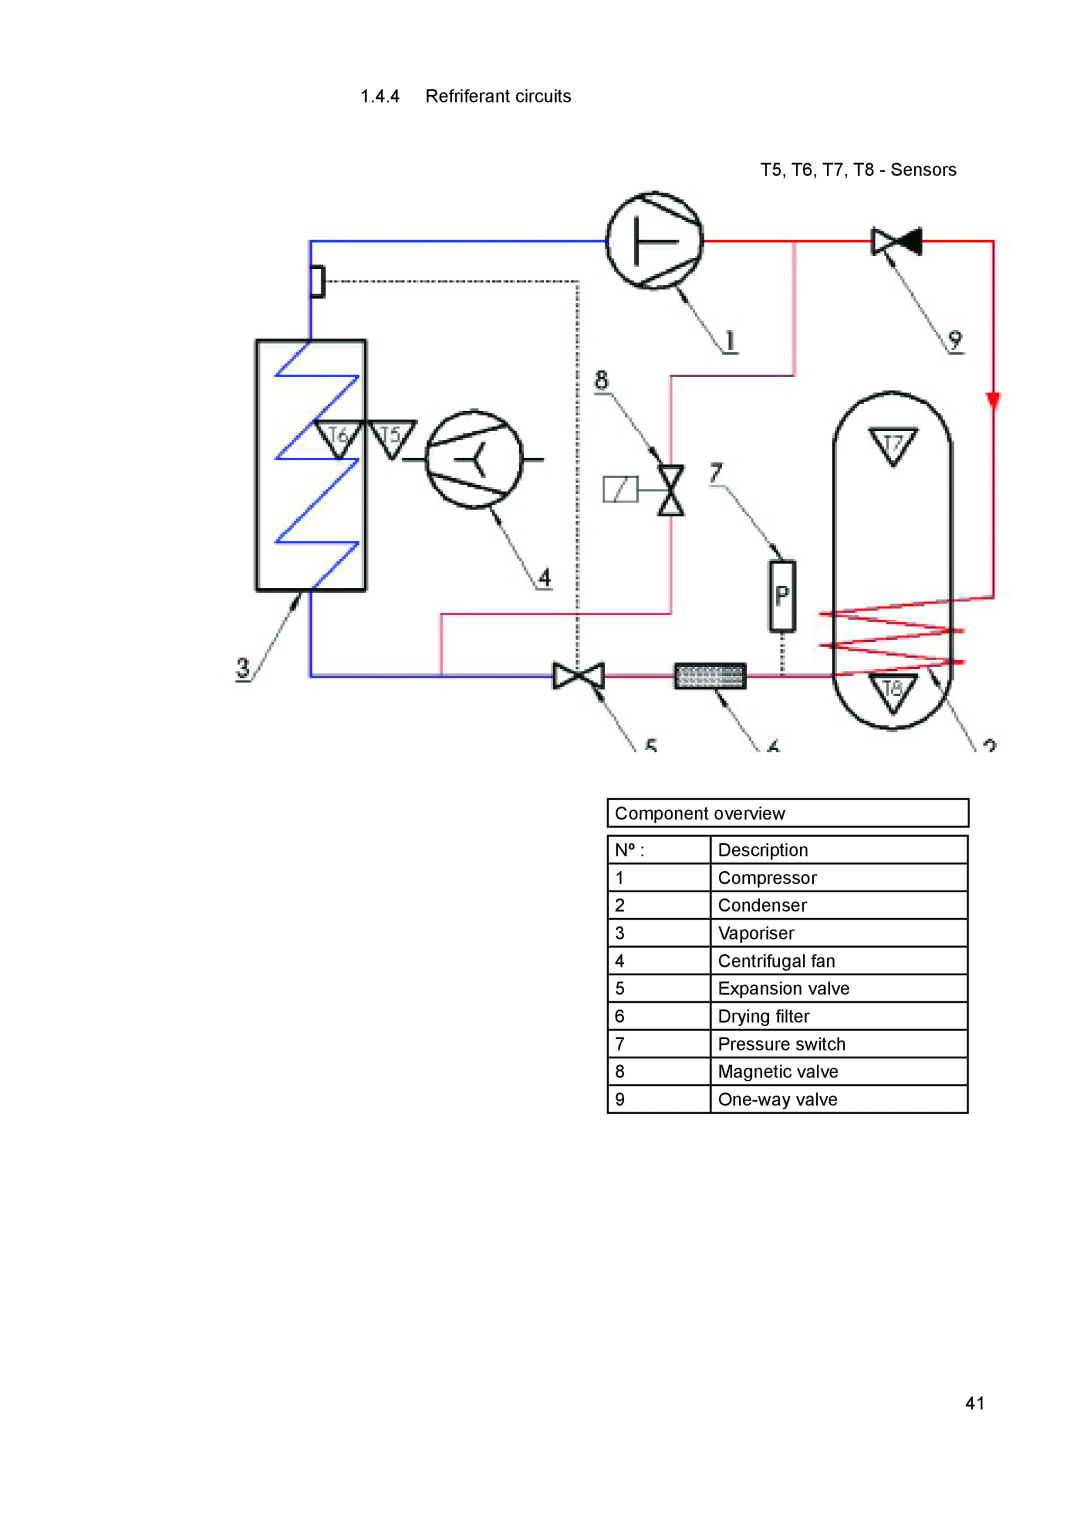 A.O. Smith 290 1.4.4Refriferant circuits, T5, T6, T7, T8 - Sensors Component overview, Description, Compressor, Condenser 